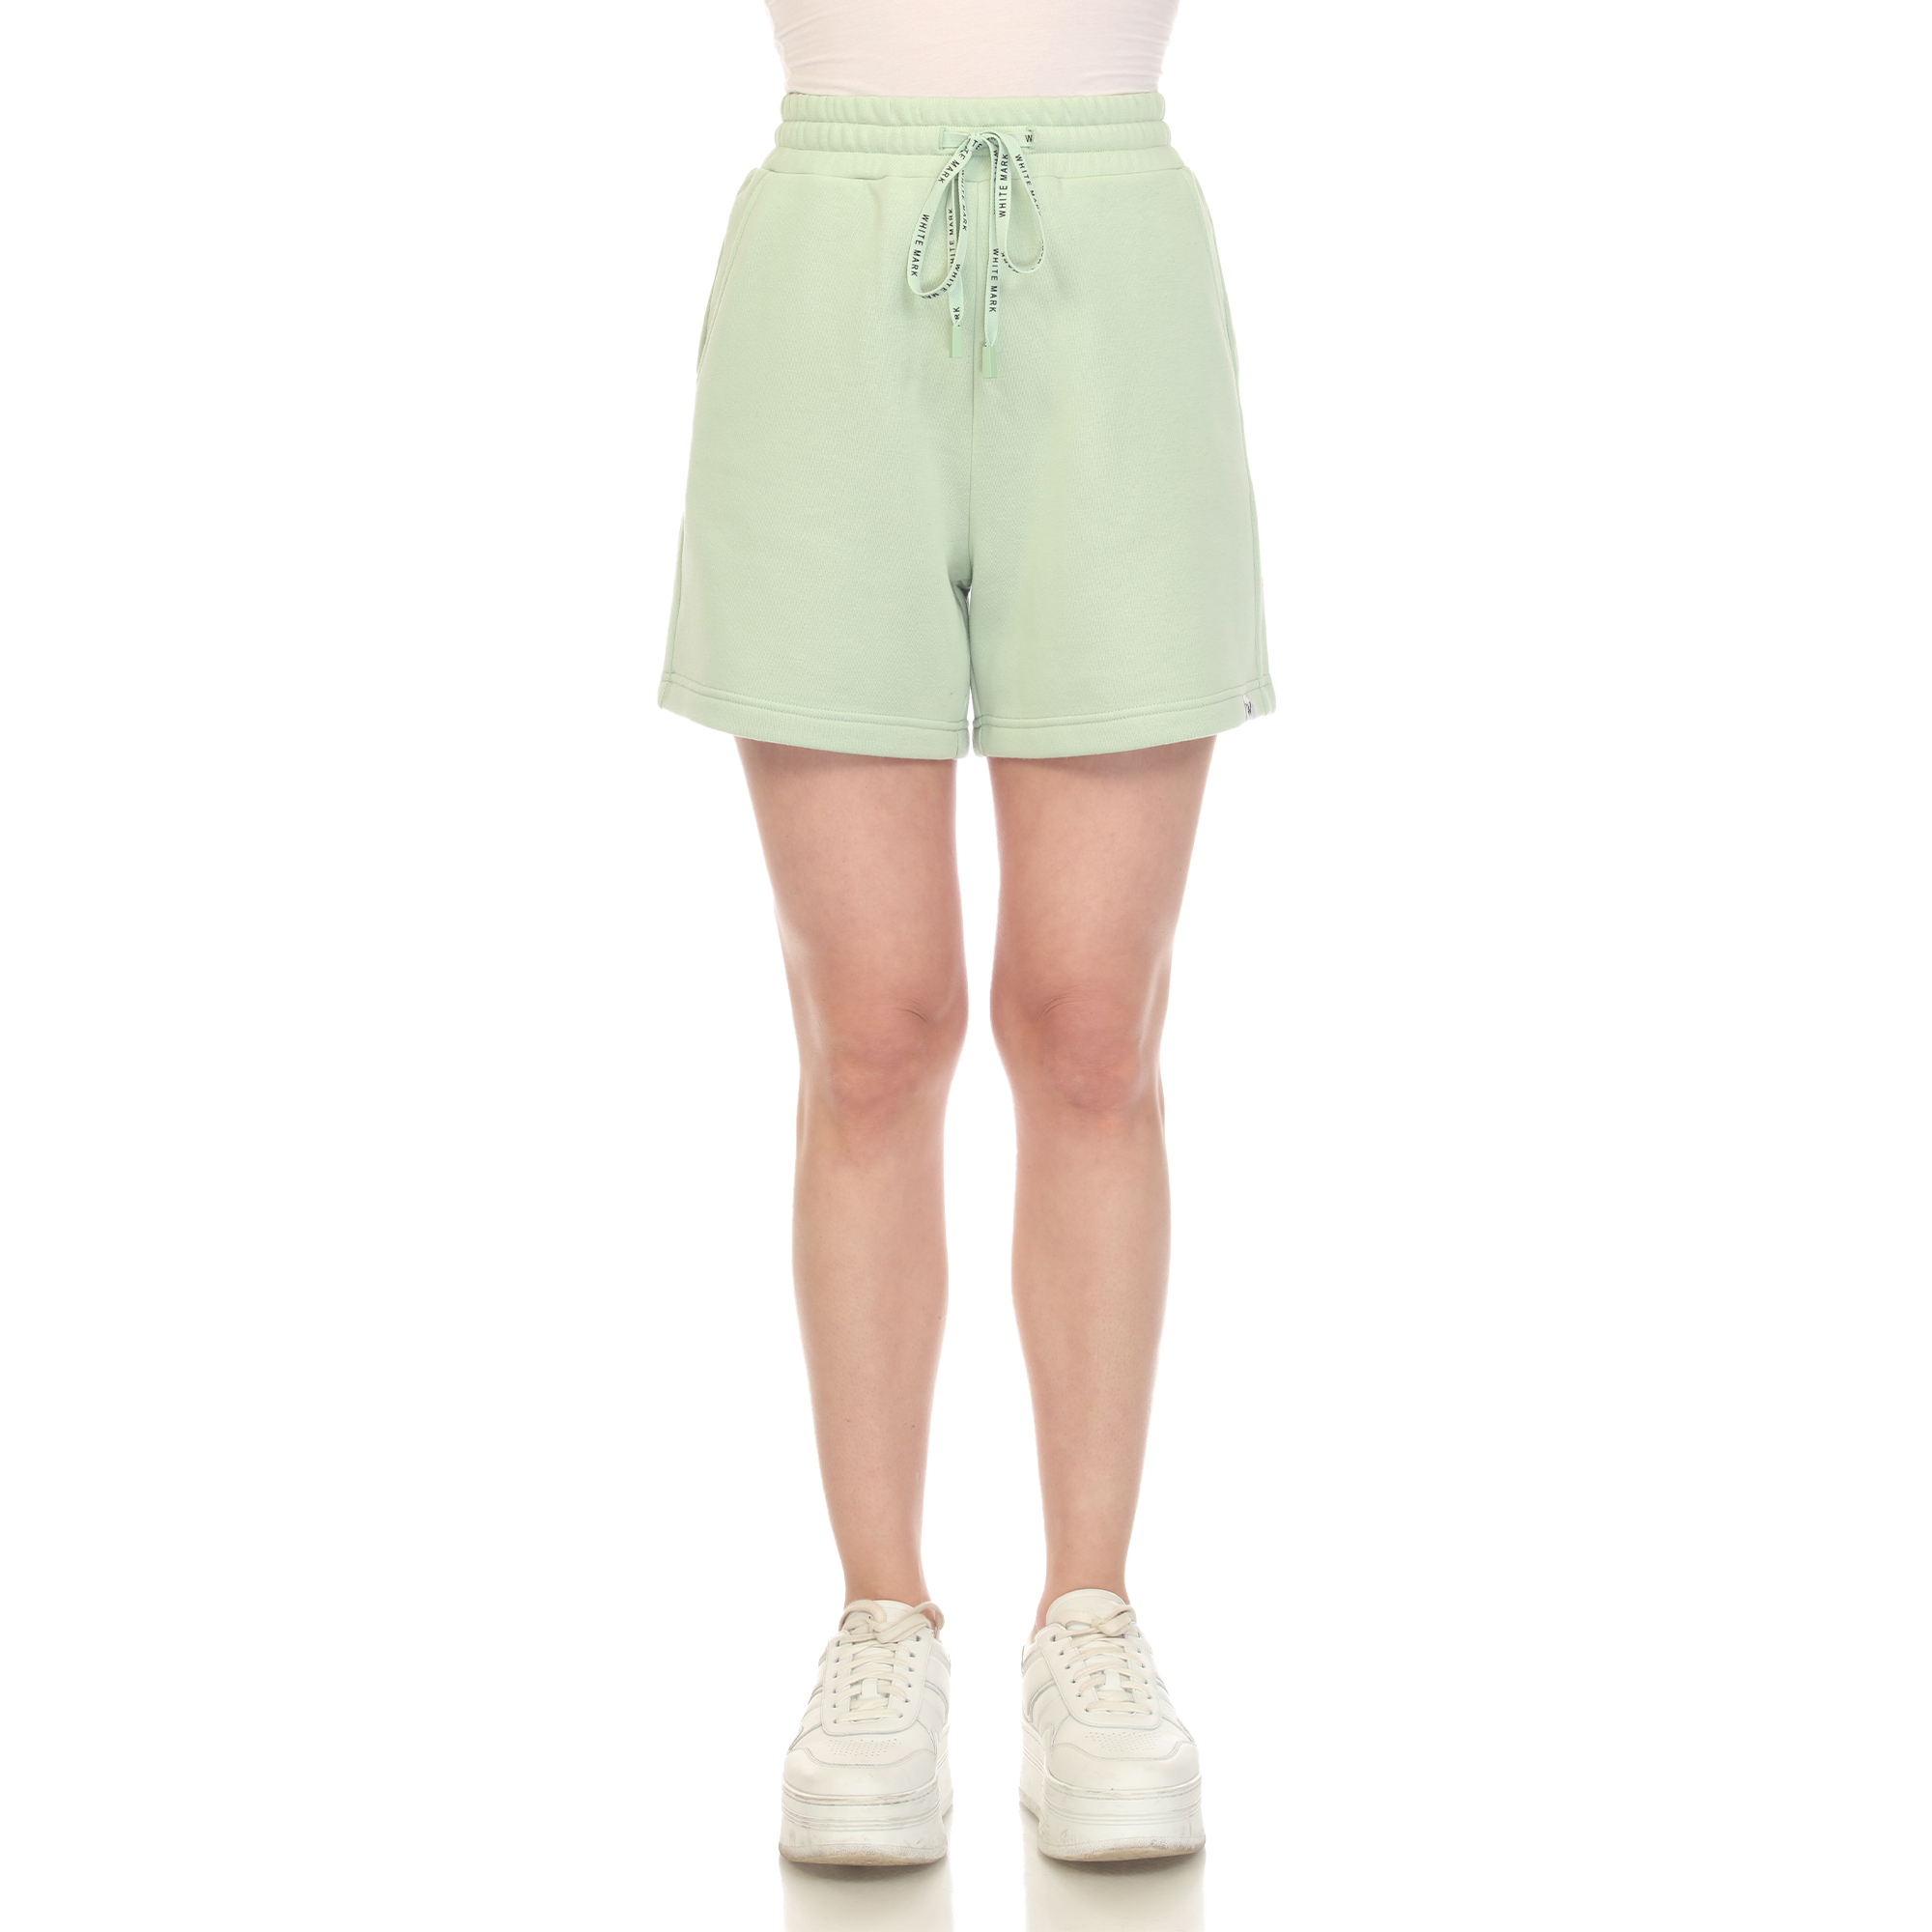 White Mark Women's Super Soft Drawstring Waistband Sweat Shorts - Sage, 3X